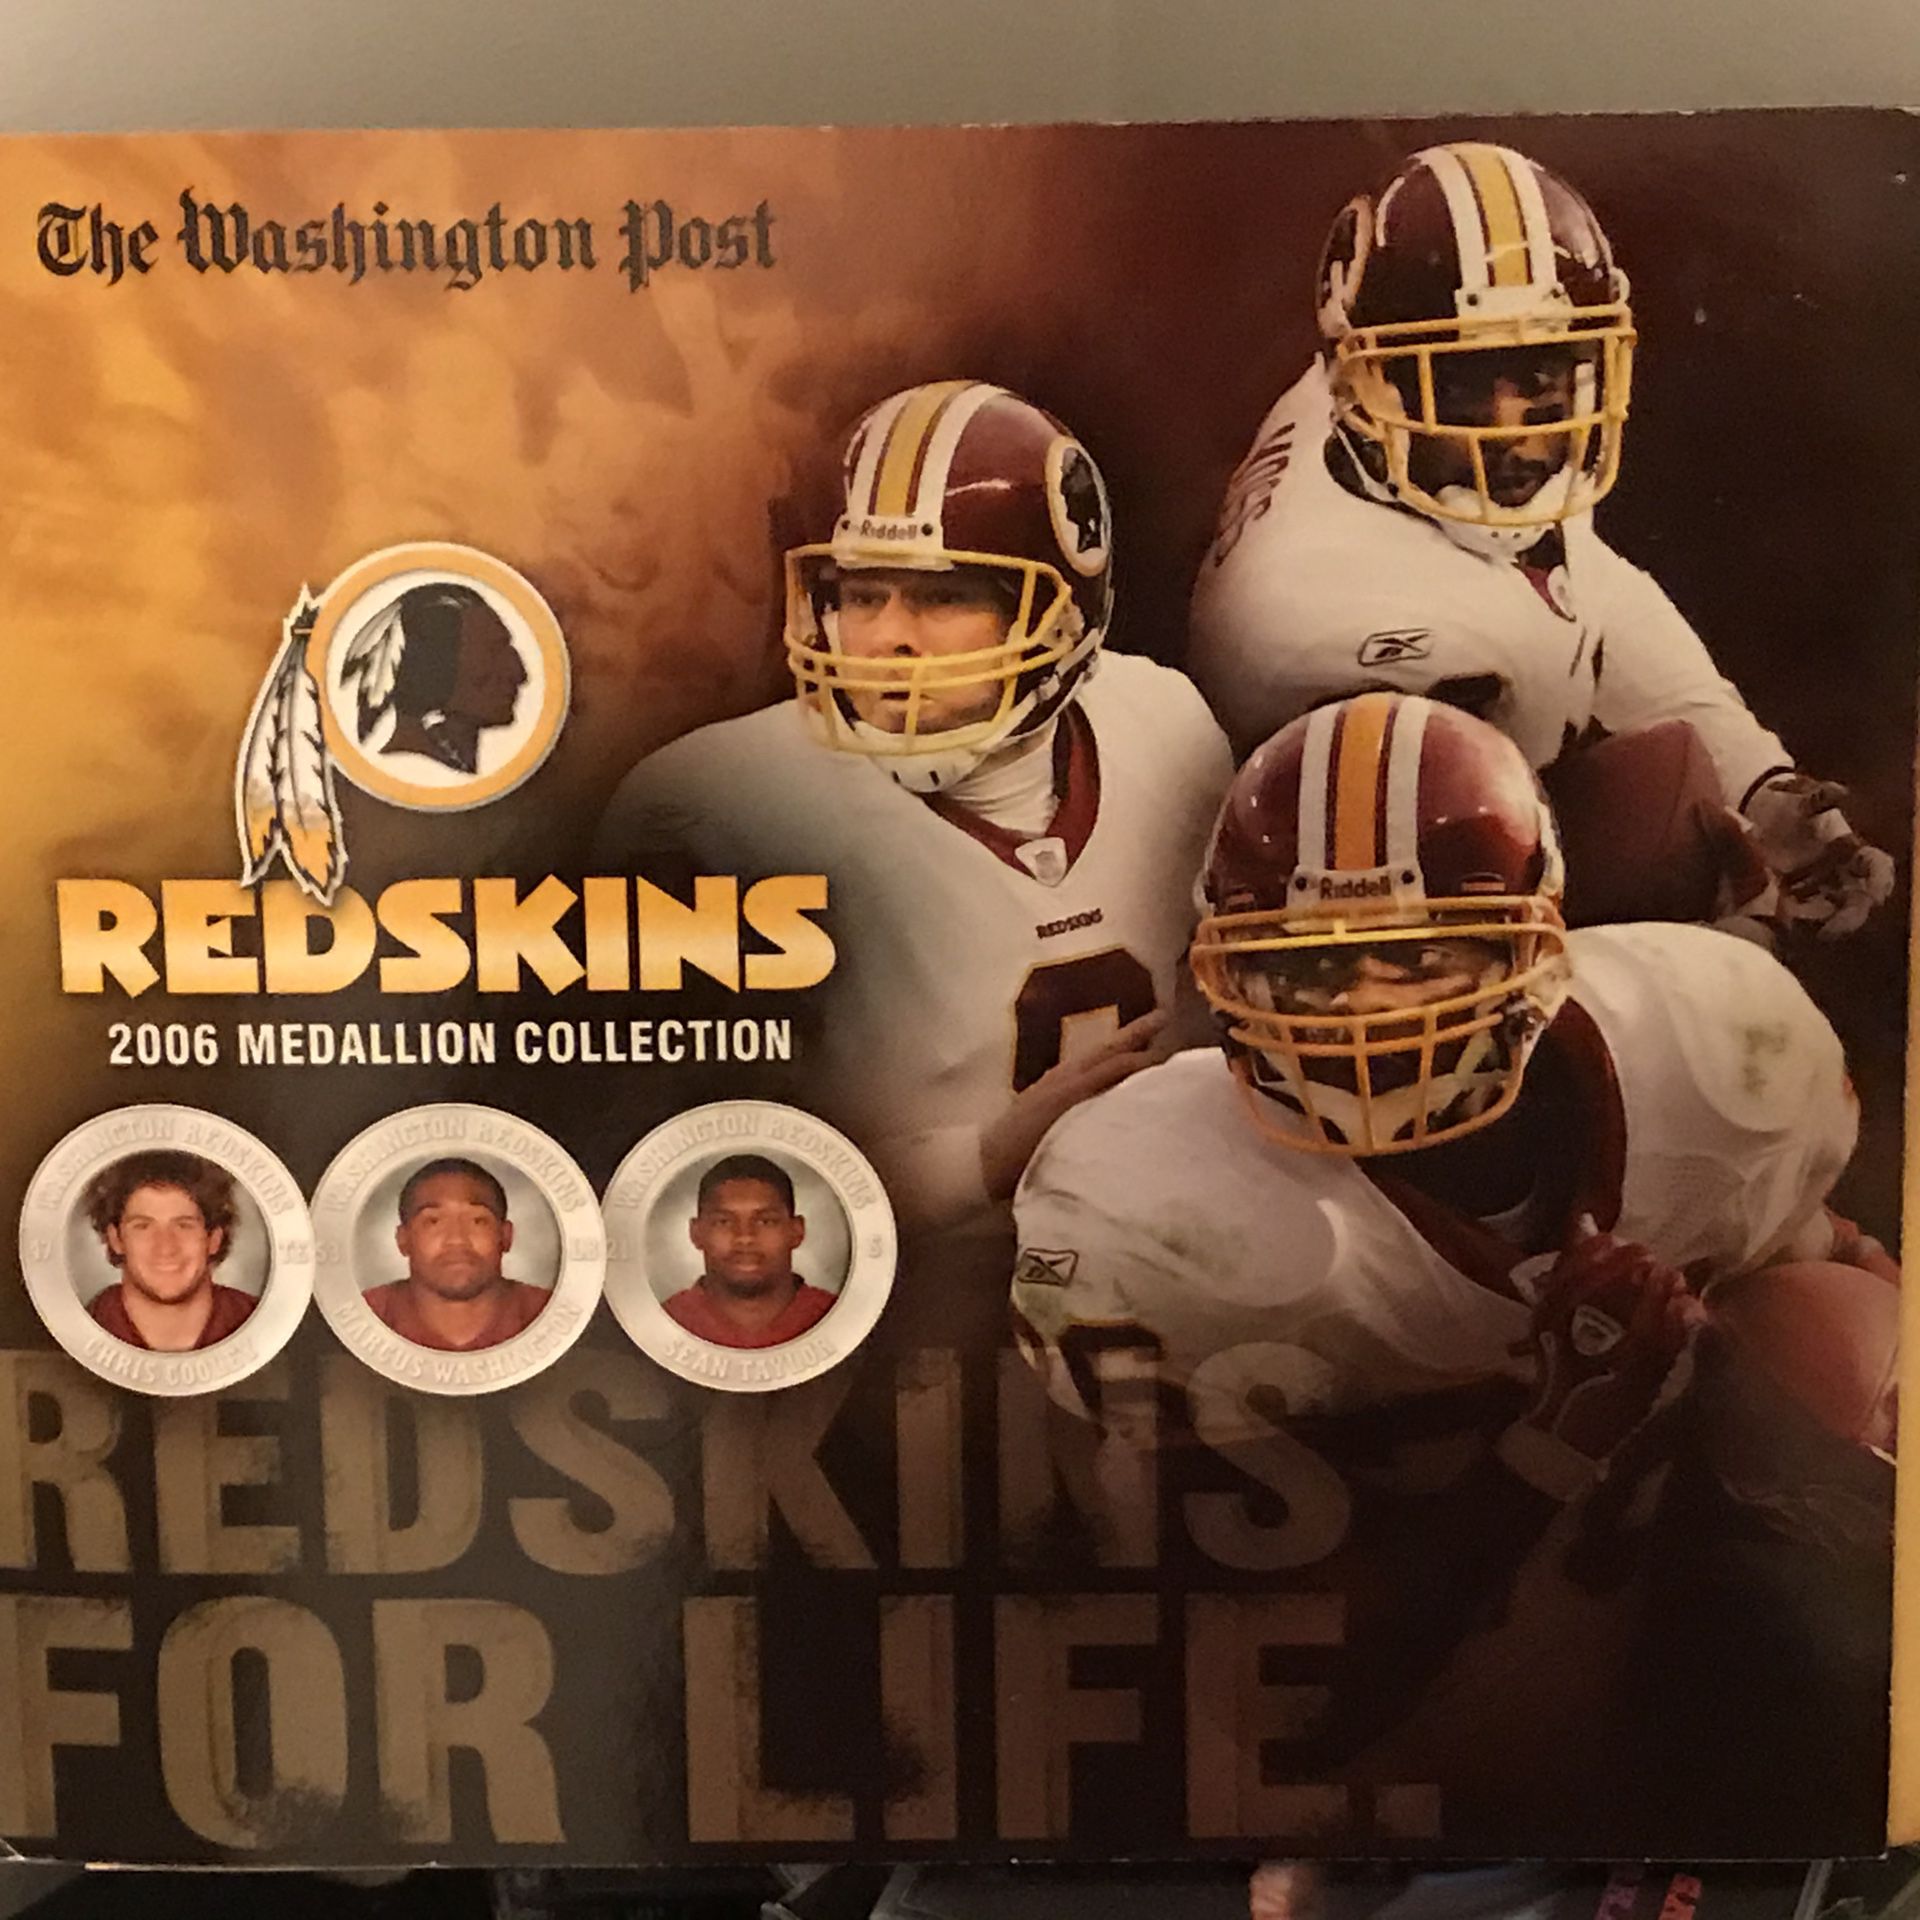 The Washington post ,Redskins medallion